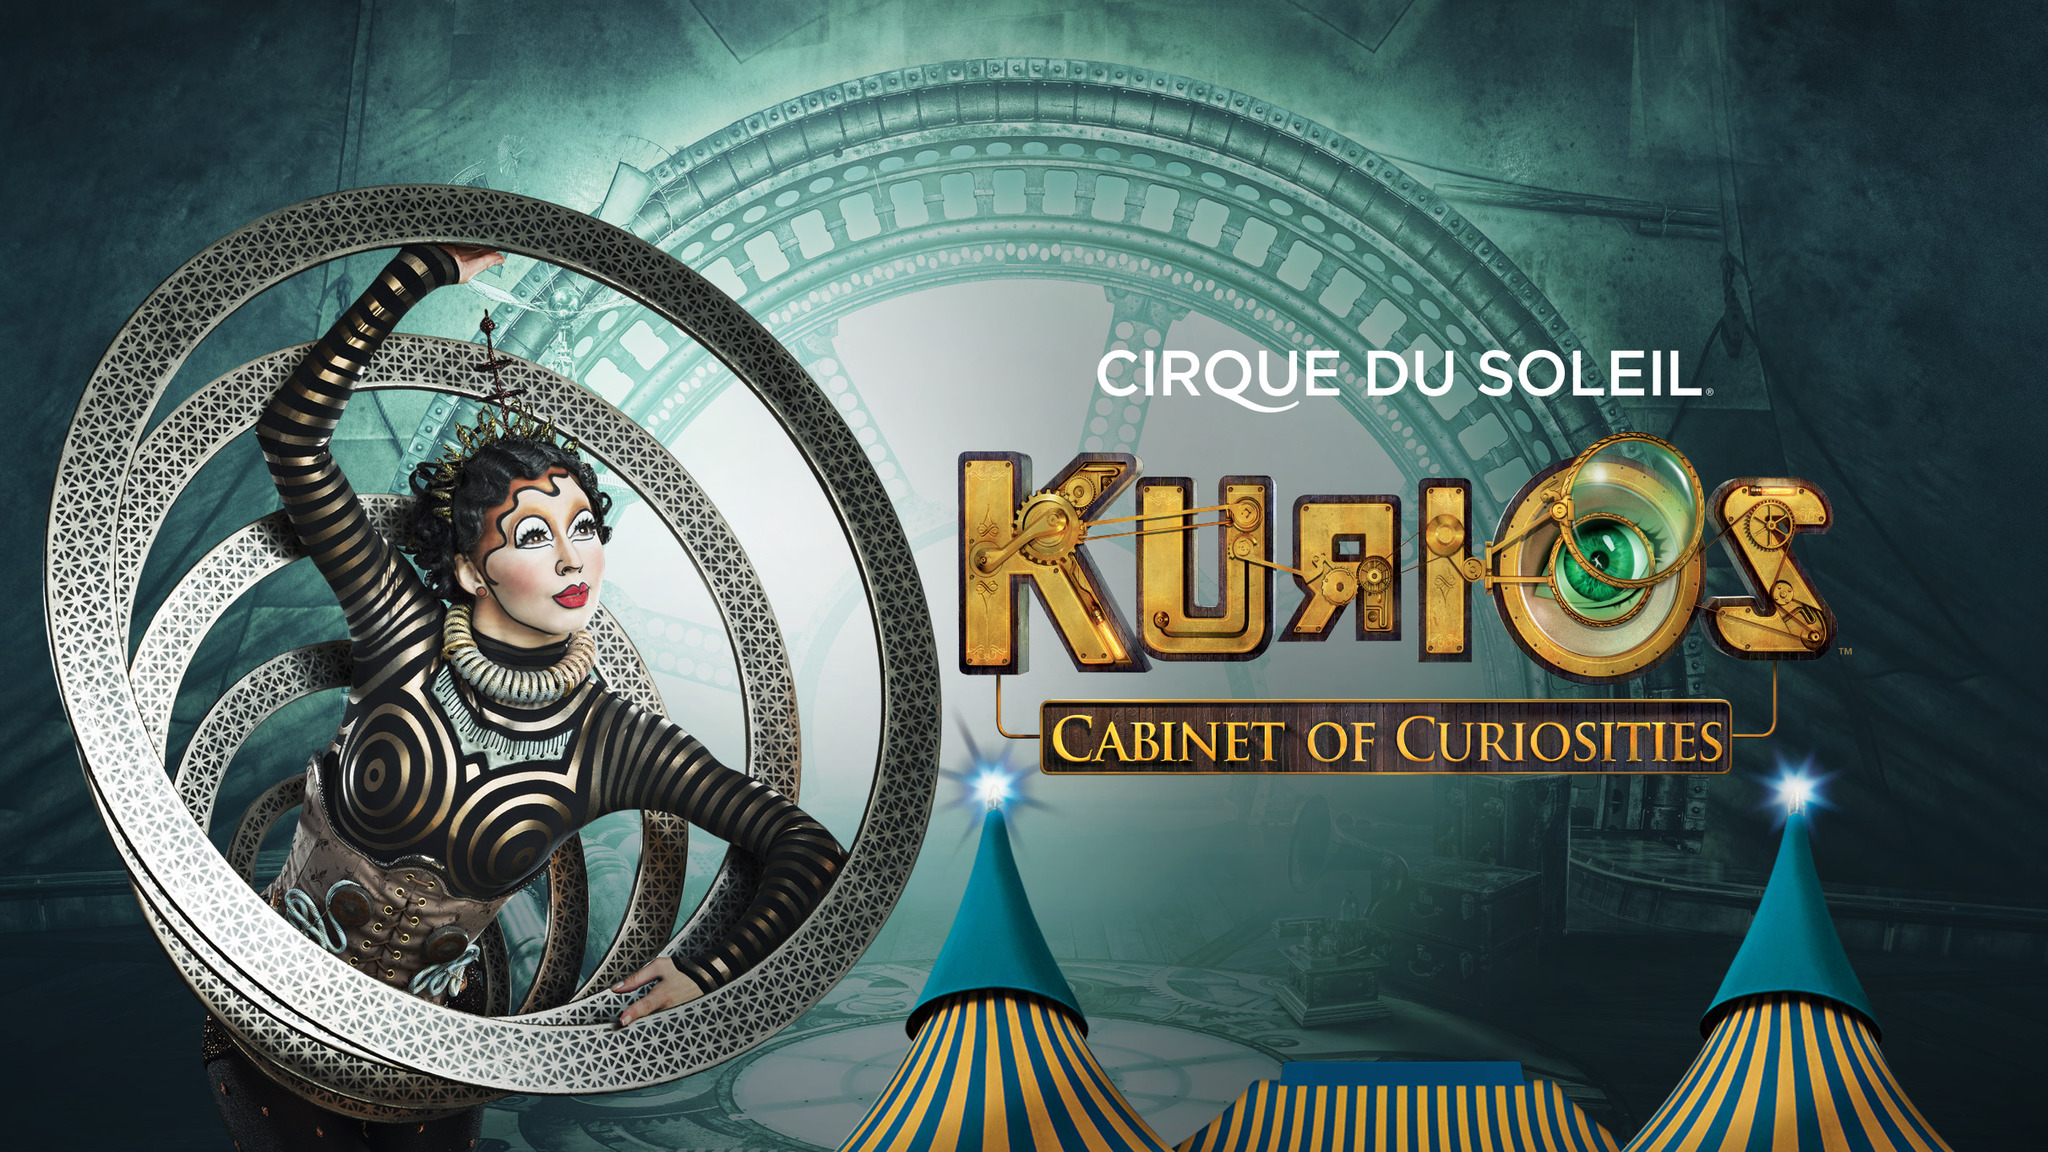 Cirque du Soleil KURIOS des curiosités Tickets Event Dates